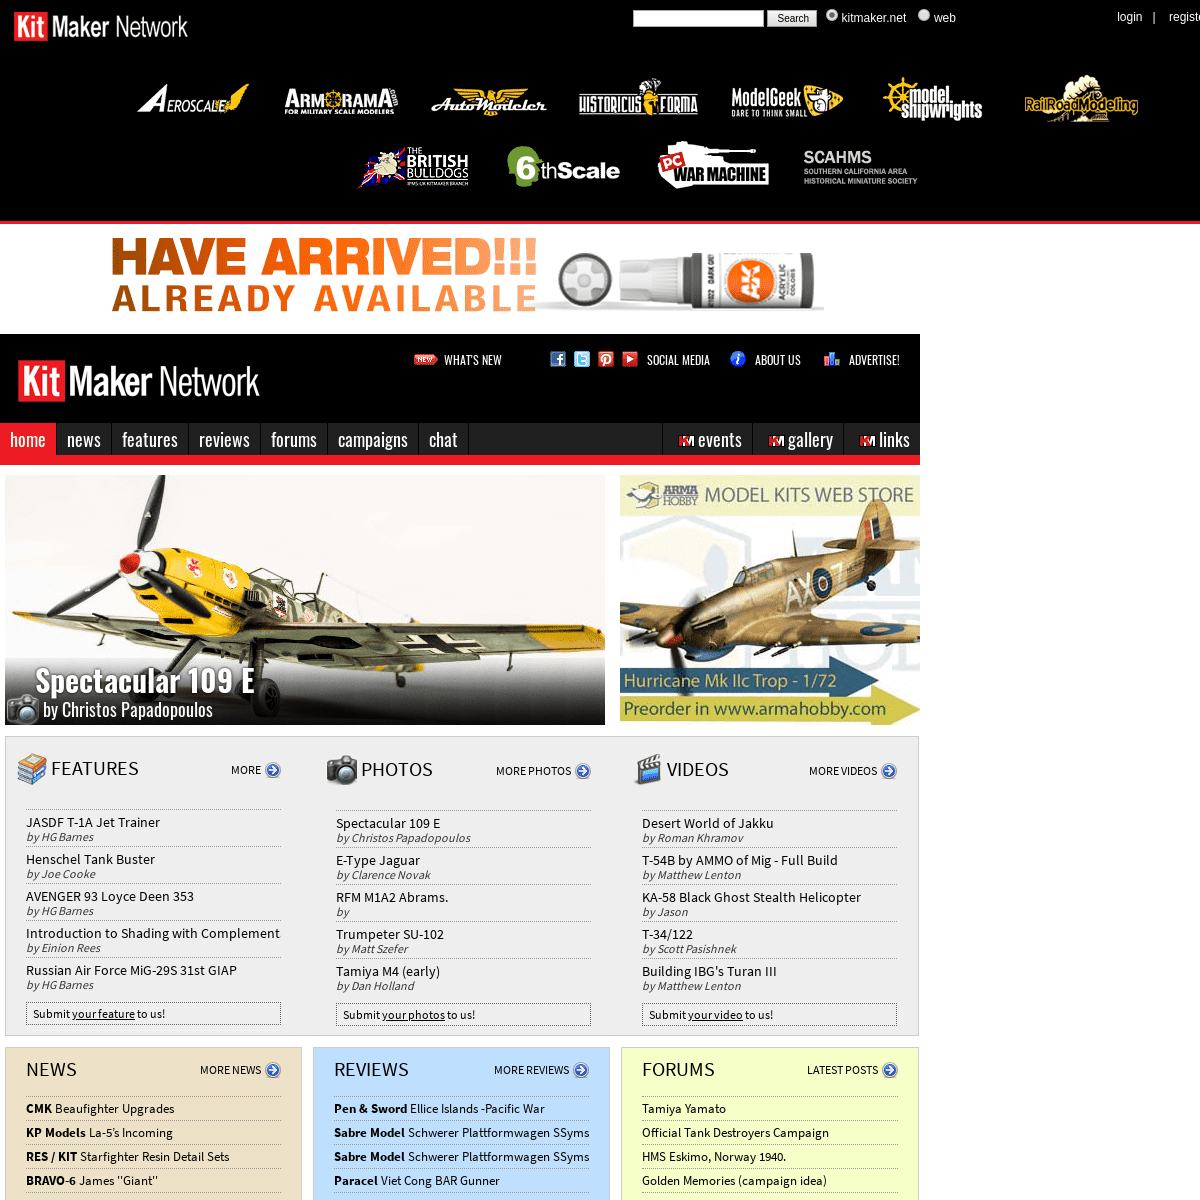 A complete backup of kitmaker.net